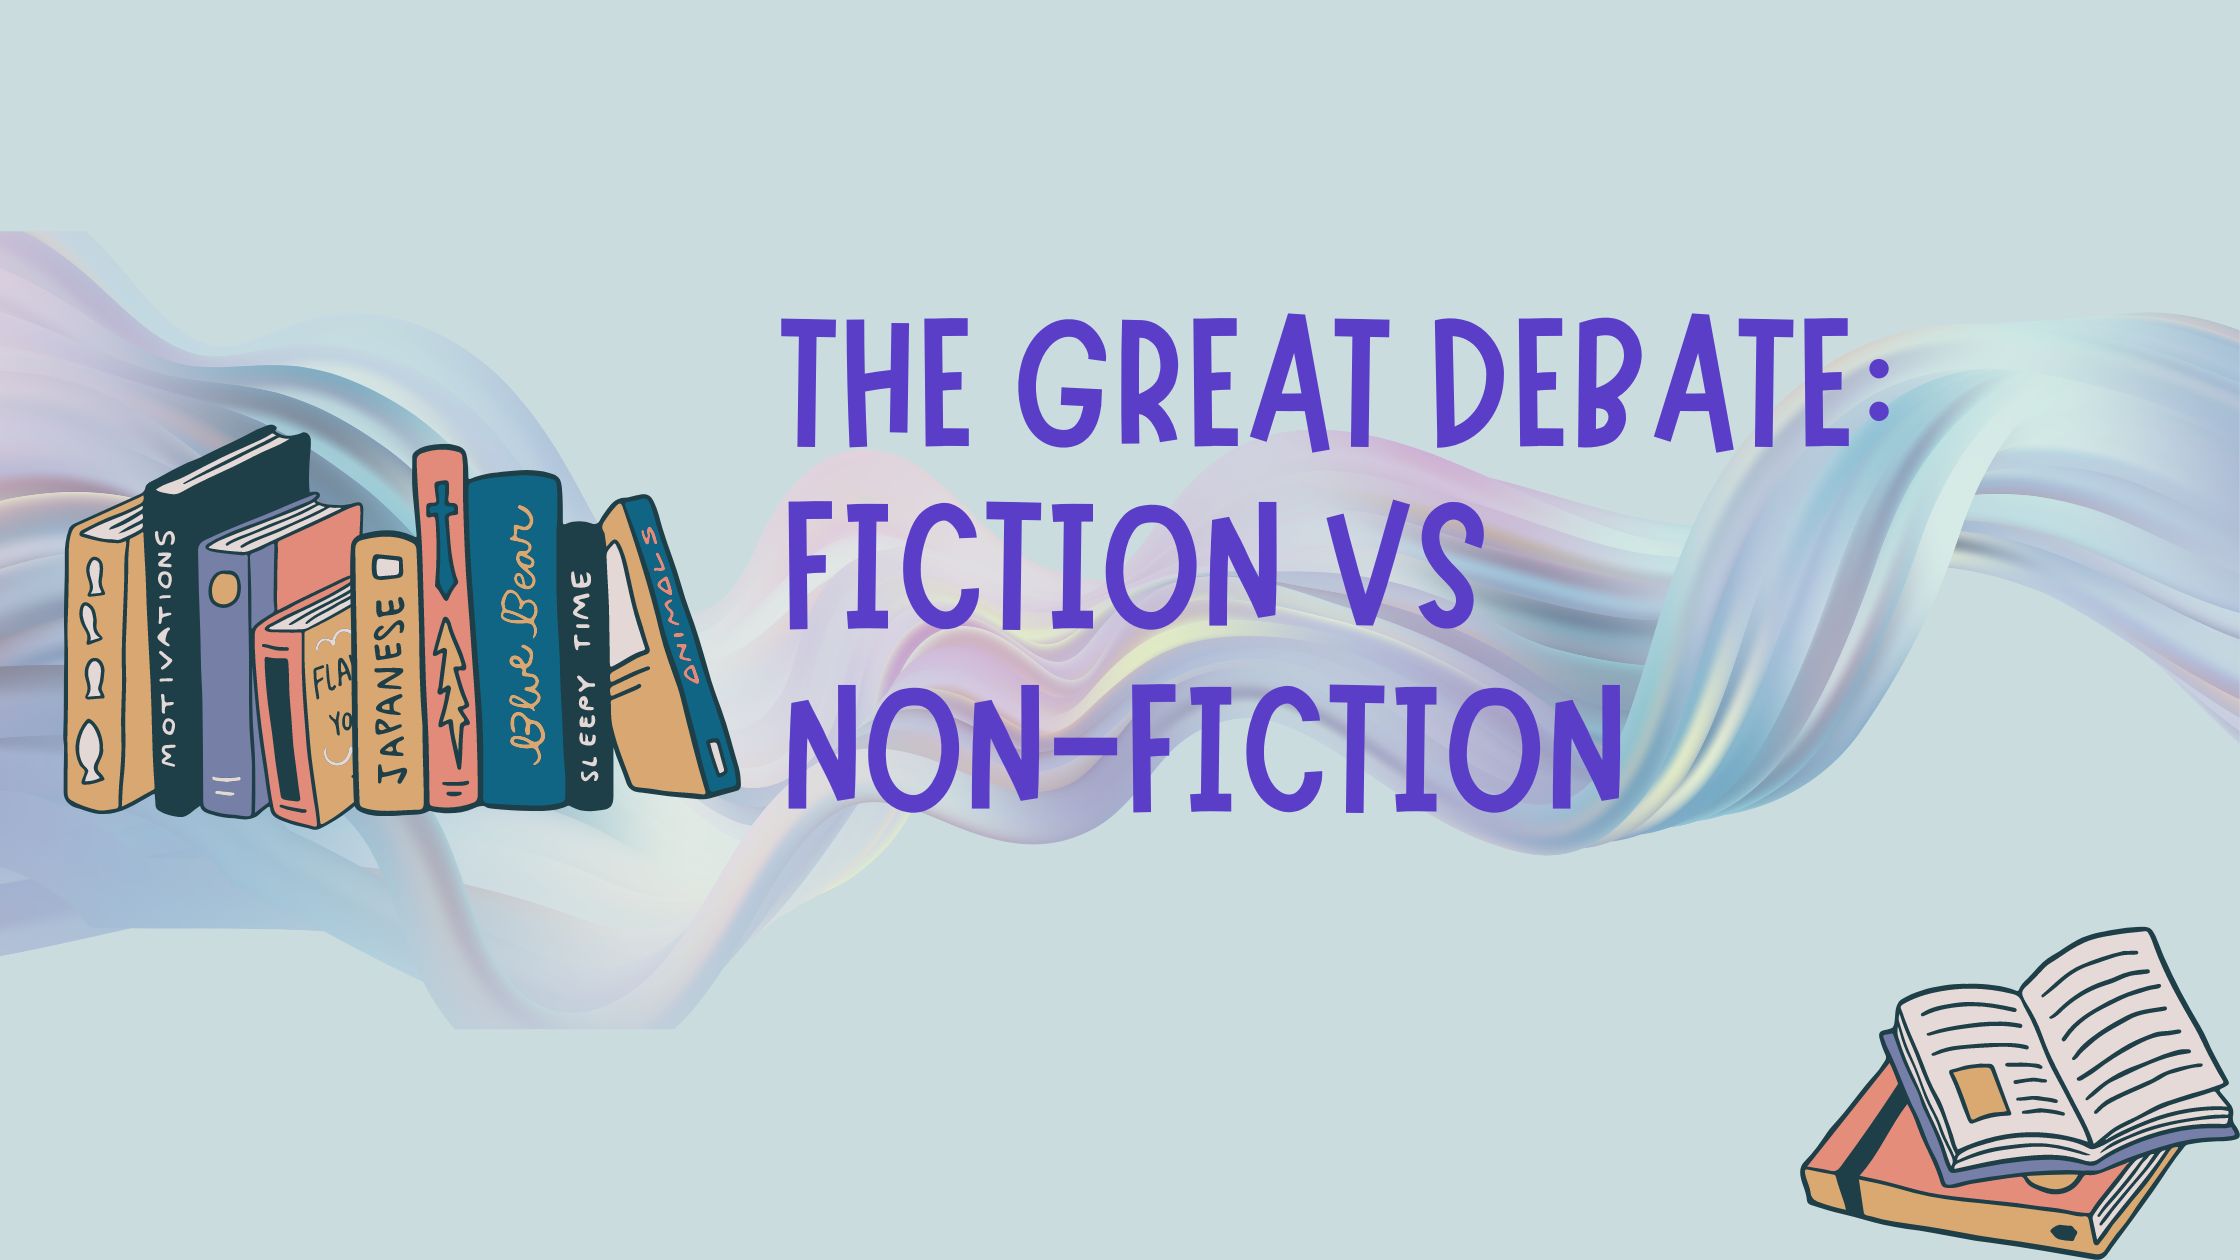 The great debate: Fiction Vs non-fiction